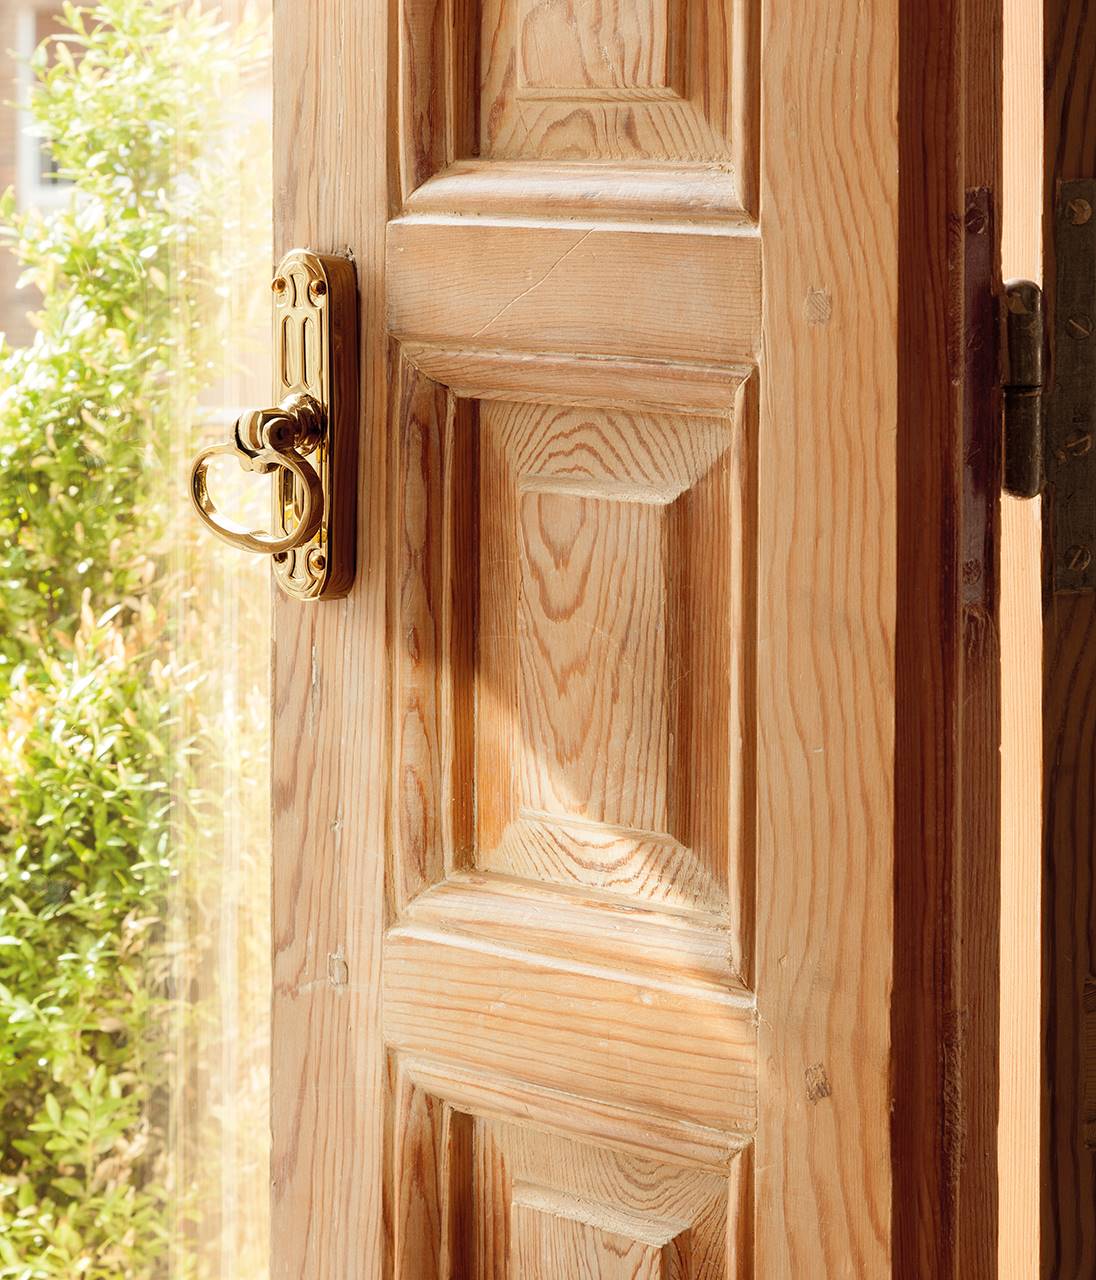 Detalle de puerta de madera